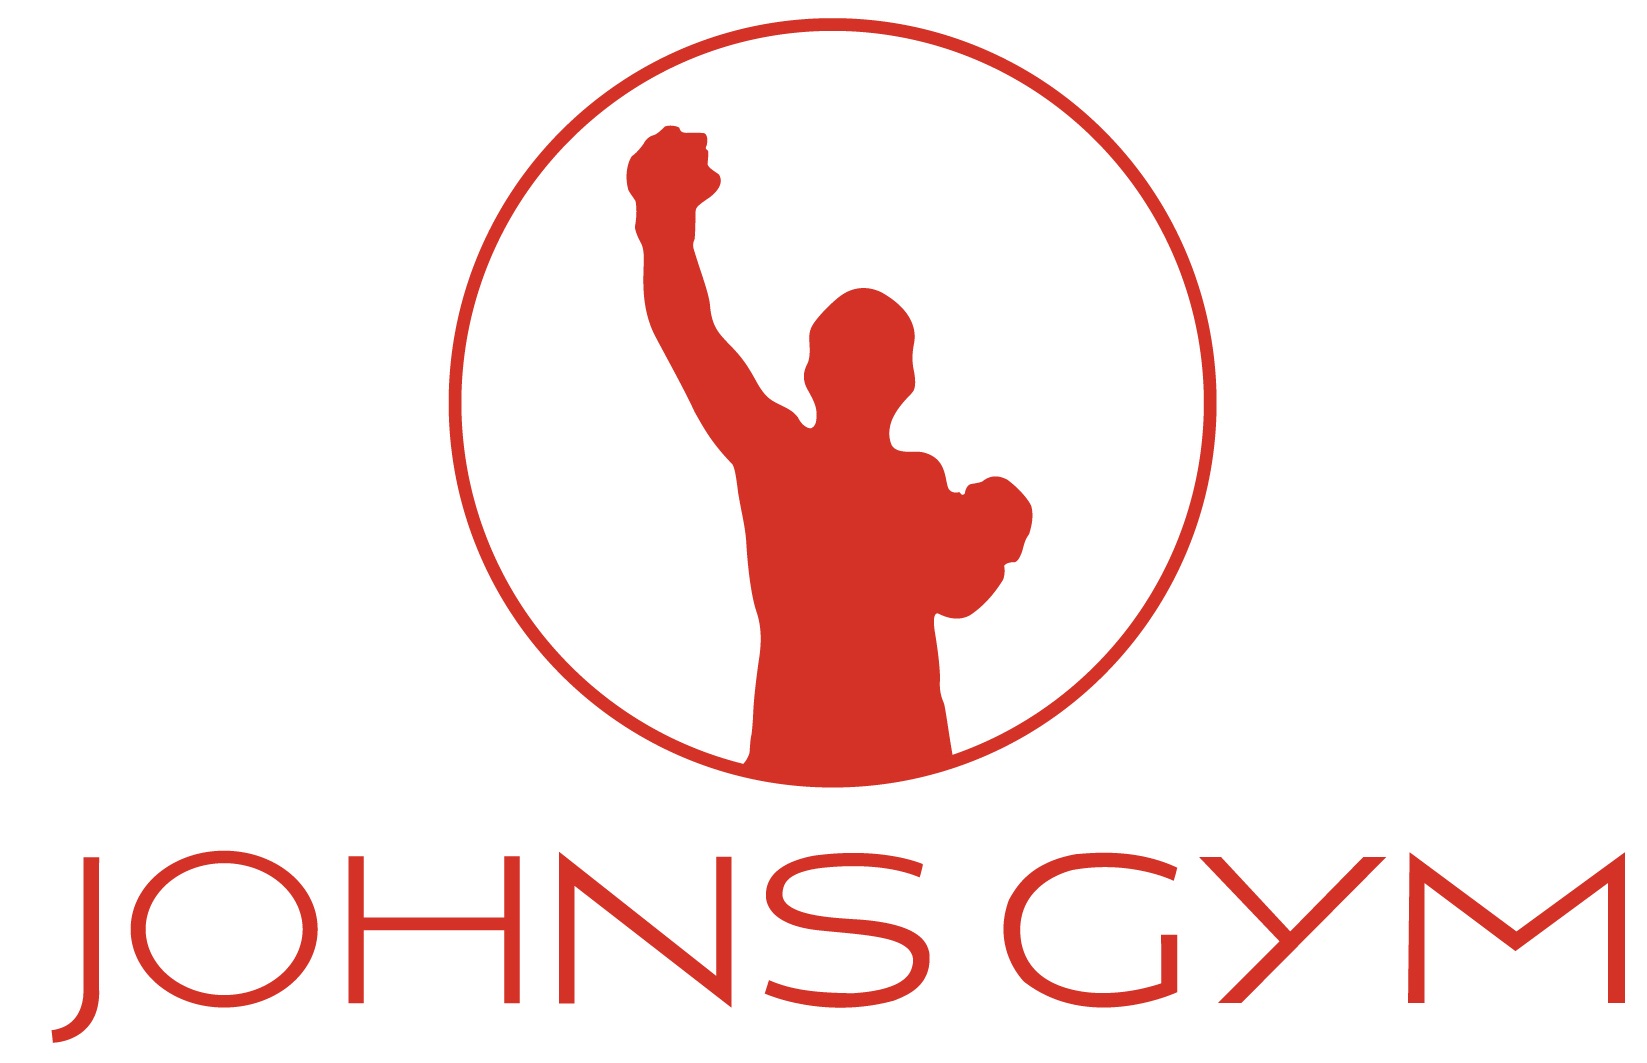 The John's Gym logo.